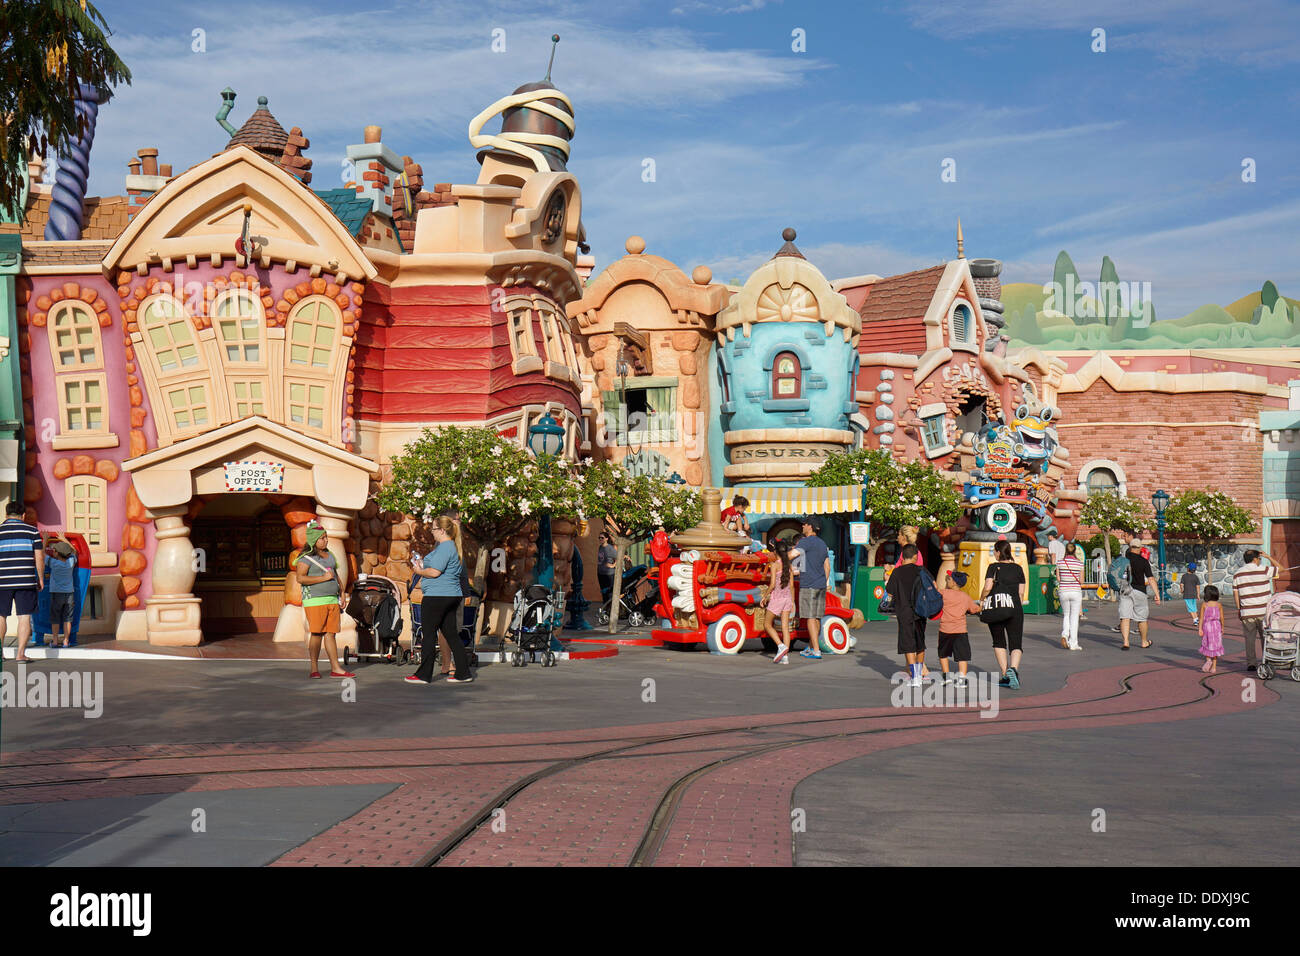 Toontown, Disneyland, Magic Kingdom, Fantasyland, Anaheim California Stock Photo